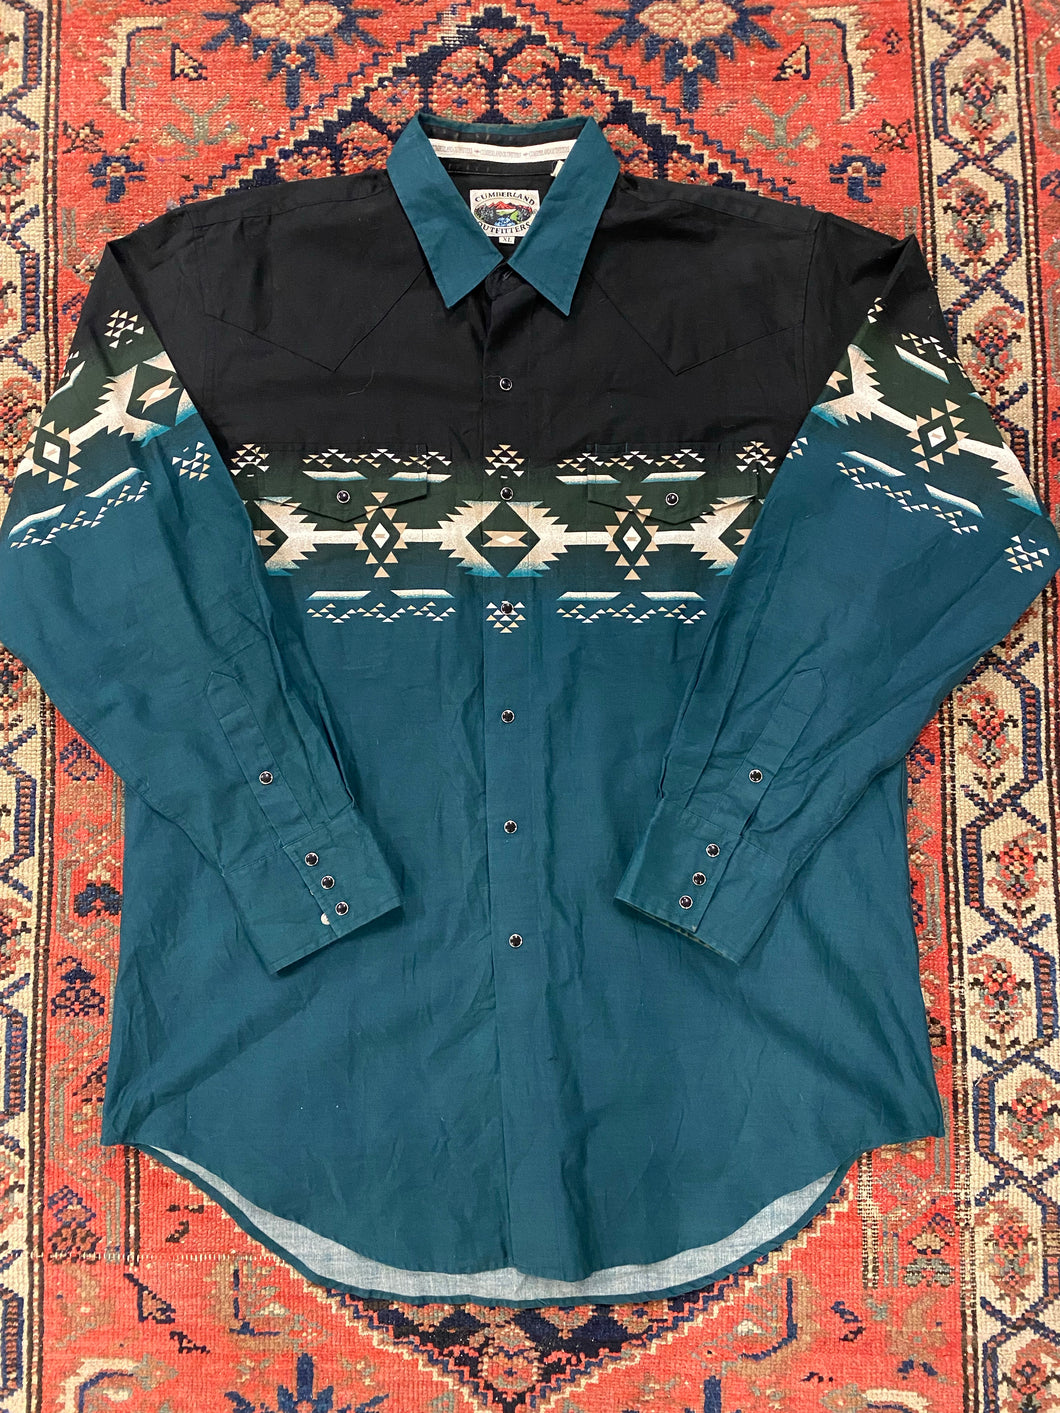 Vintage Western Style Shirt - XL